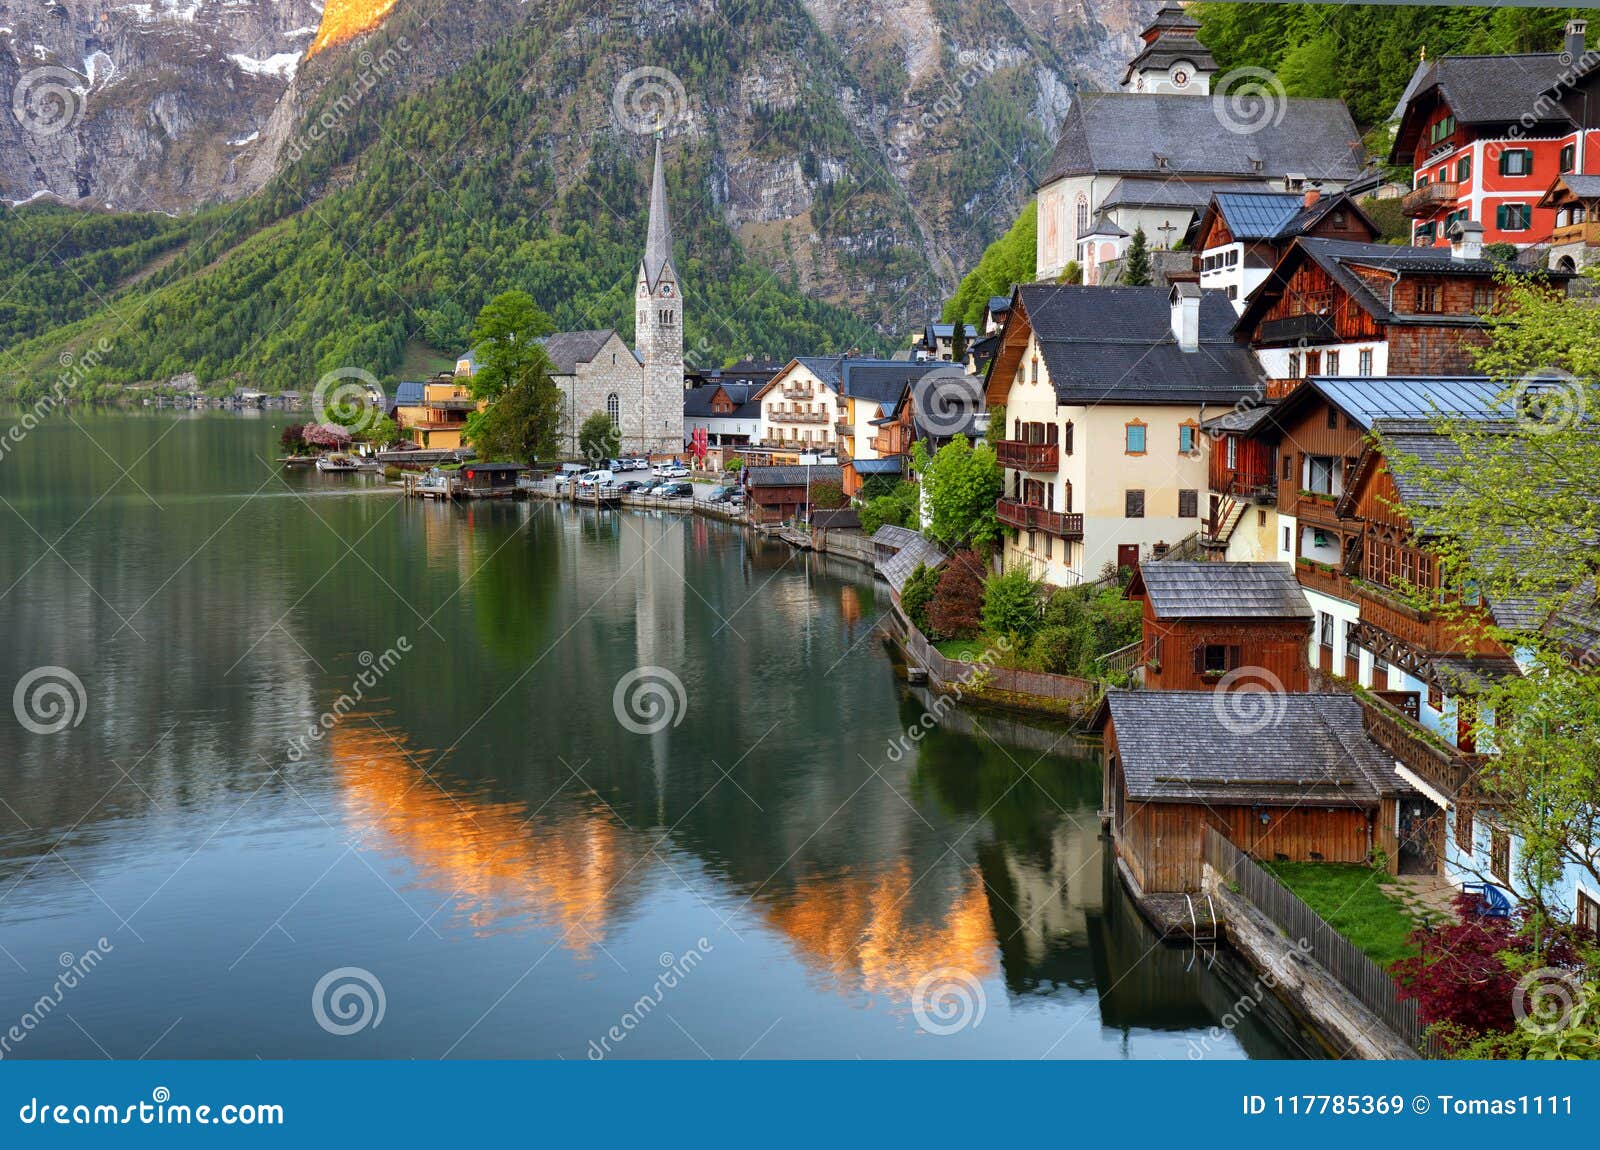 mountain landscape in austria alp with lake, hallstatt